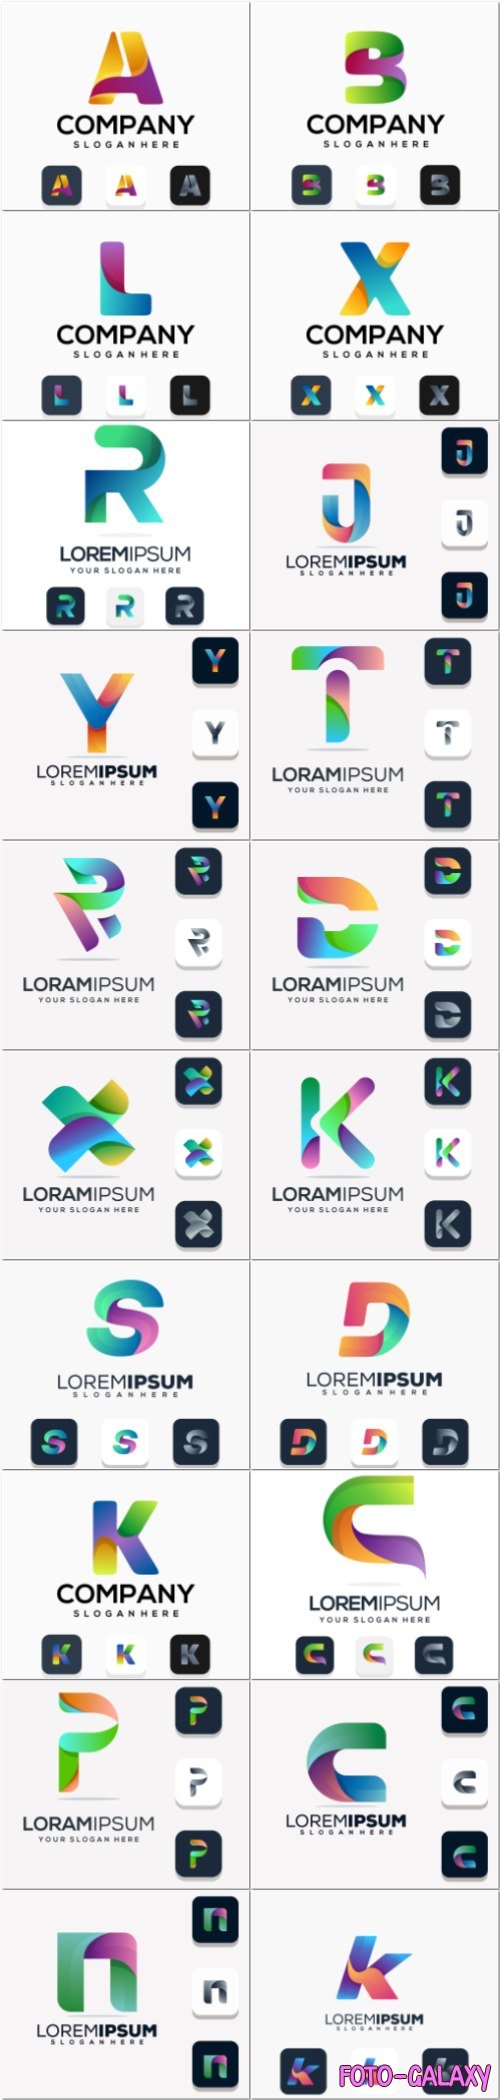 Modern logo design premium vector